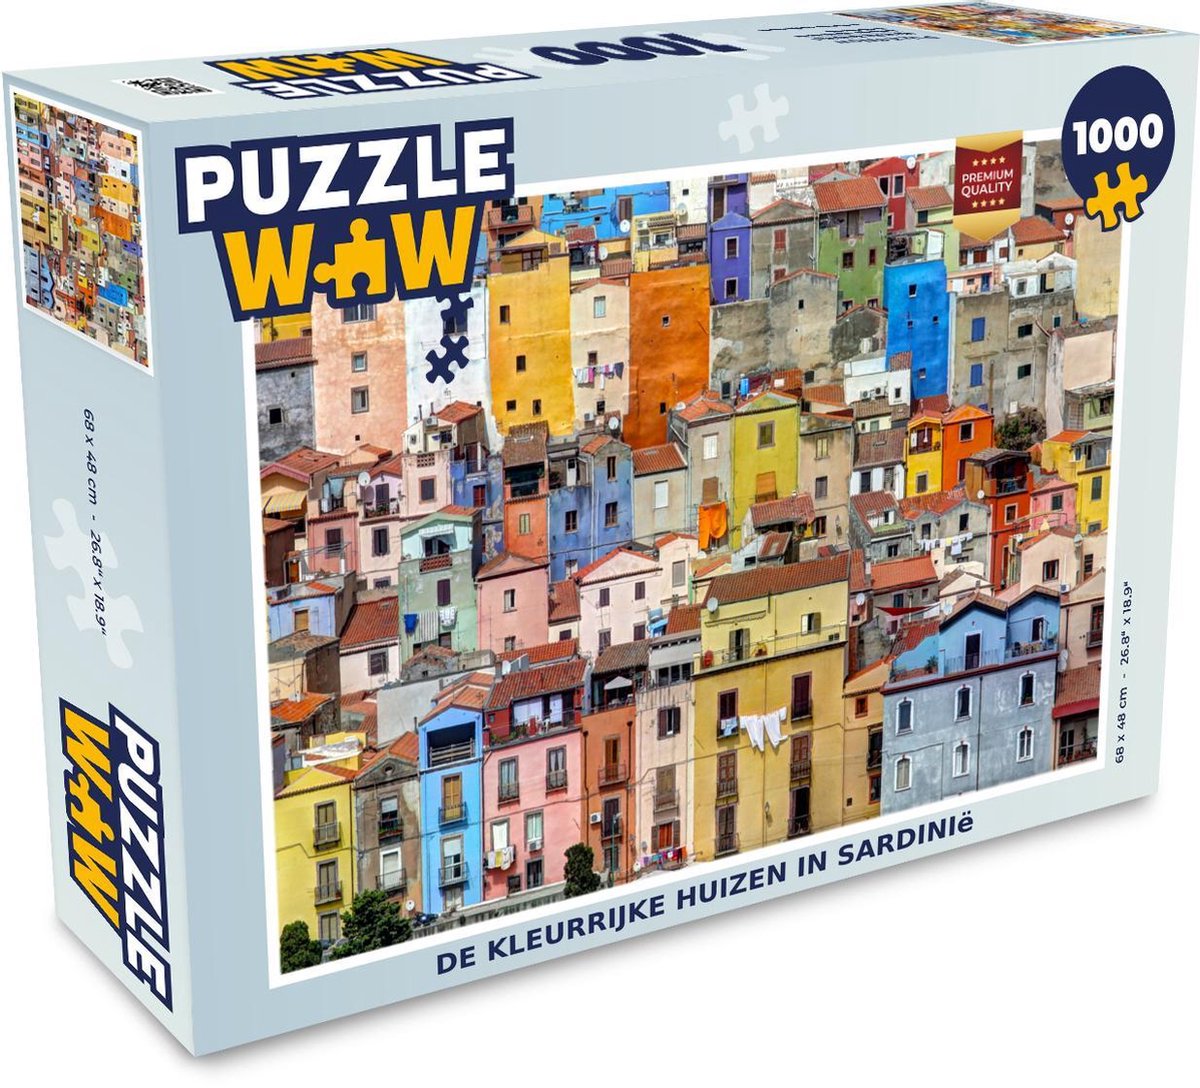 Puzzel De kleurrijke huizen in Sardinië - Legpuzzel - Puzzel 1000 stukjes volwassenen - PuzzleWow